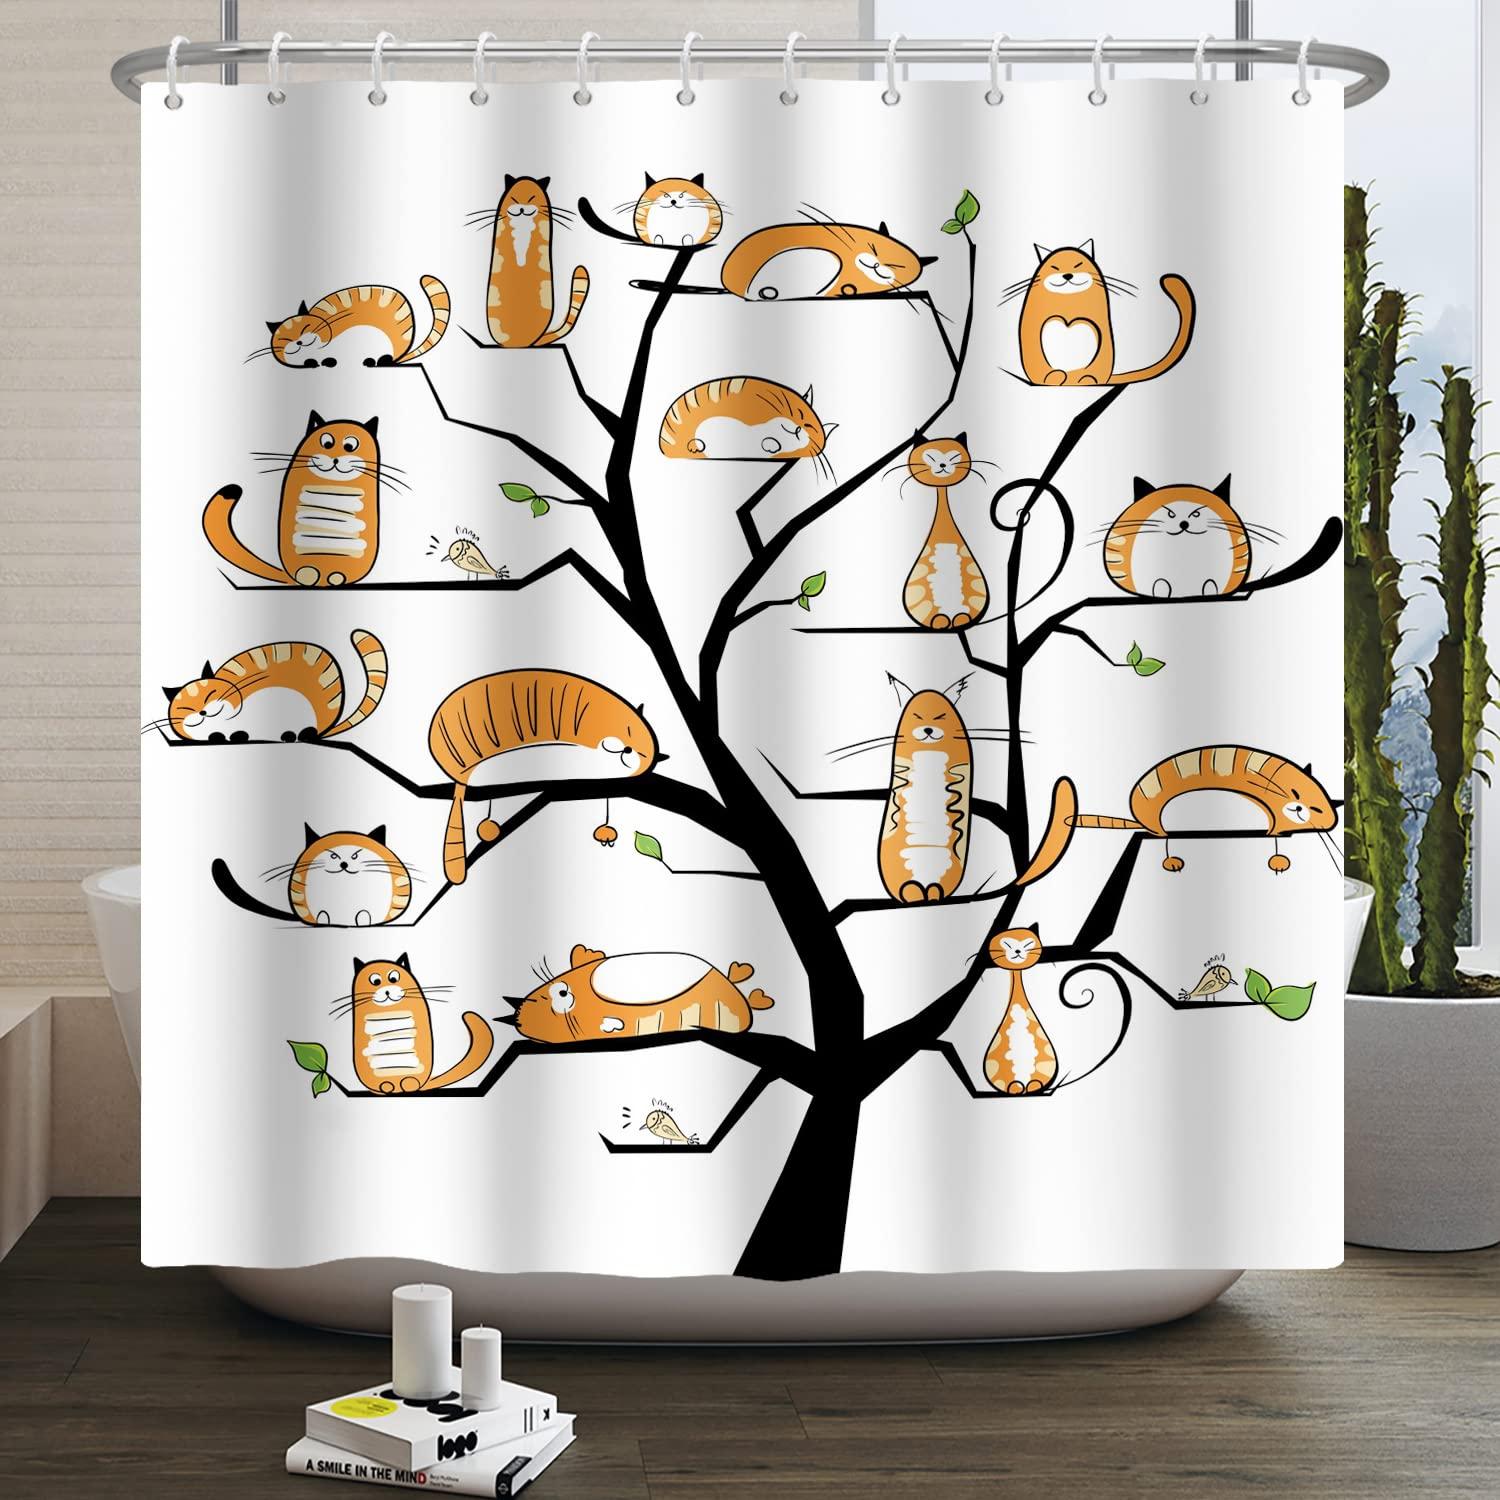 Ttincceer Cat Shower Curtain Cute Orange Kitten Tree Bathroom Curtain 60x72inch Funny Animal Pet Cat Shower Curtains Washable Bathtub Curtain for Children Bathroom Decor 1